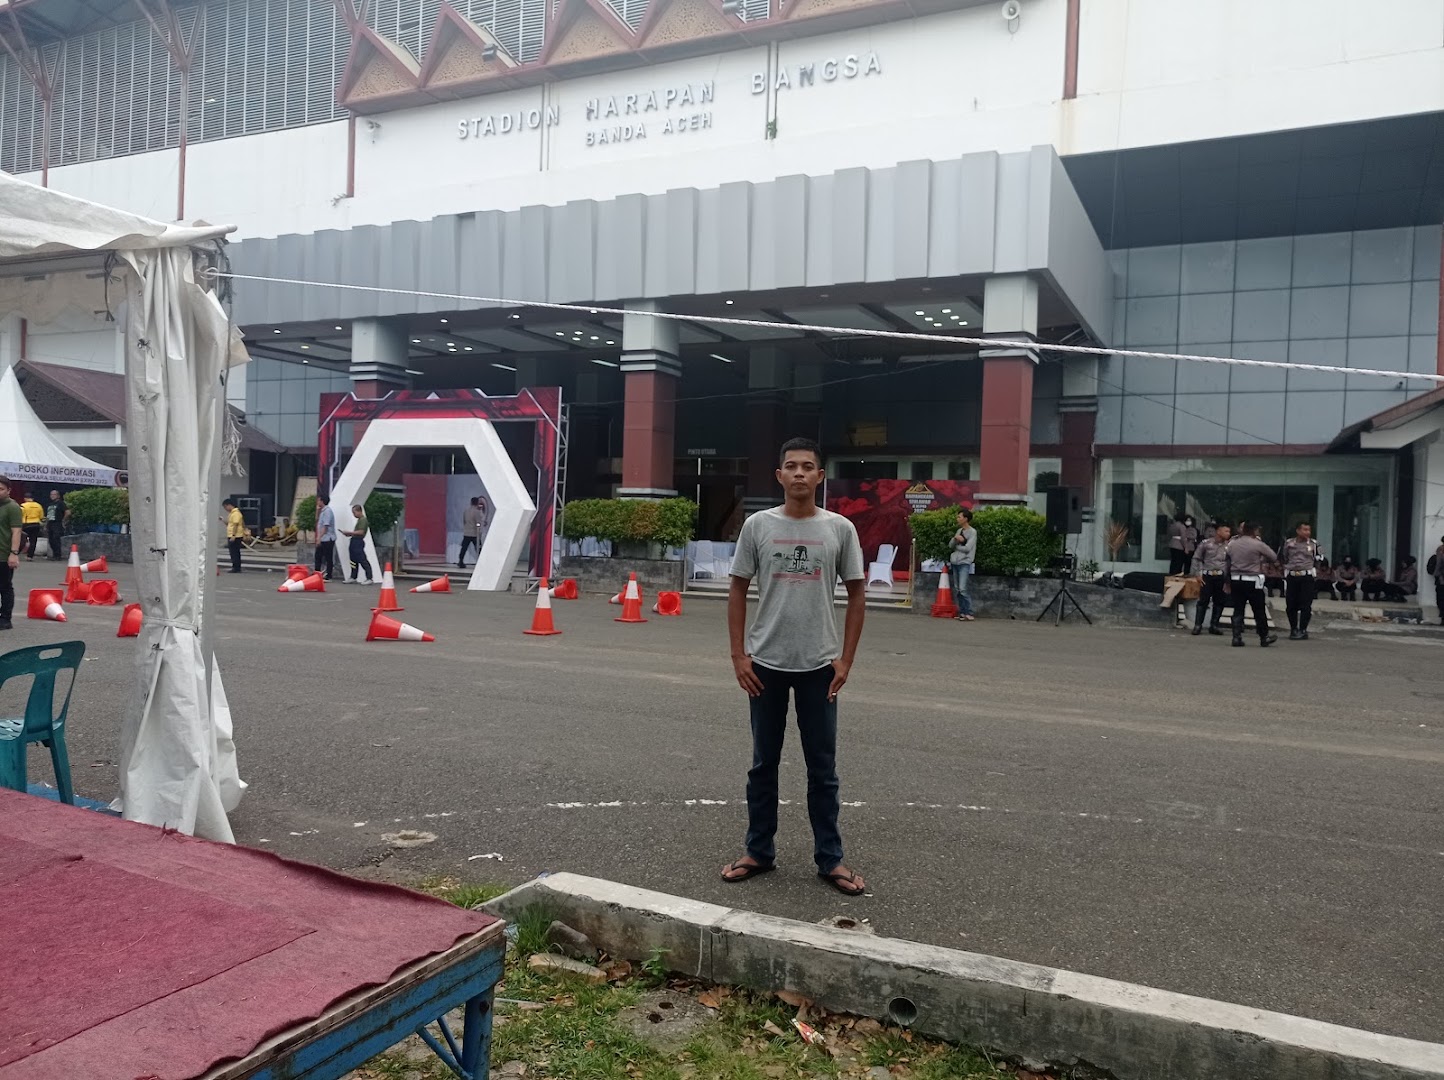 Gambar Kantin Stadion Harapan Bangsa Aceh